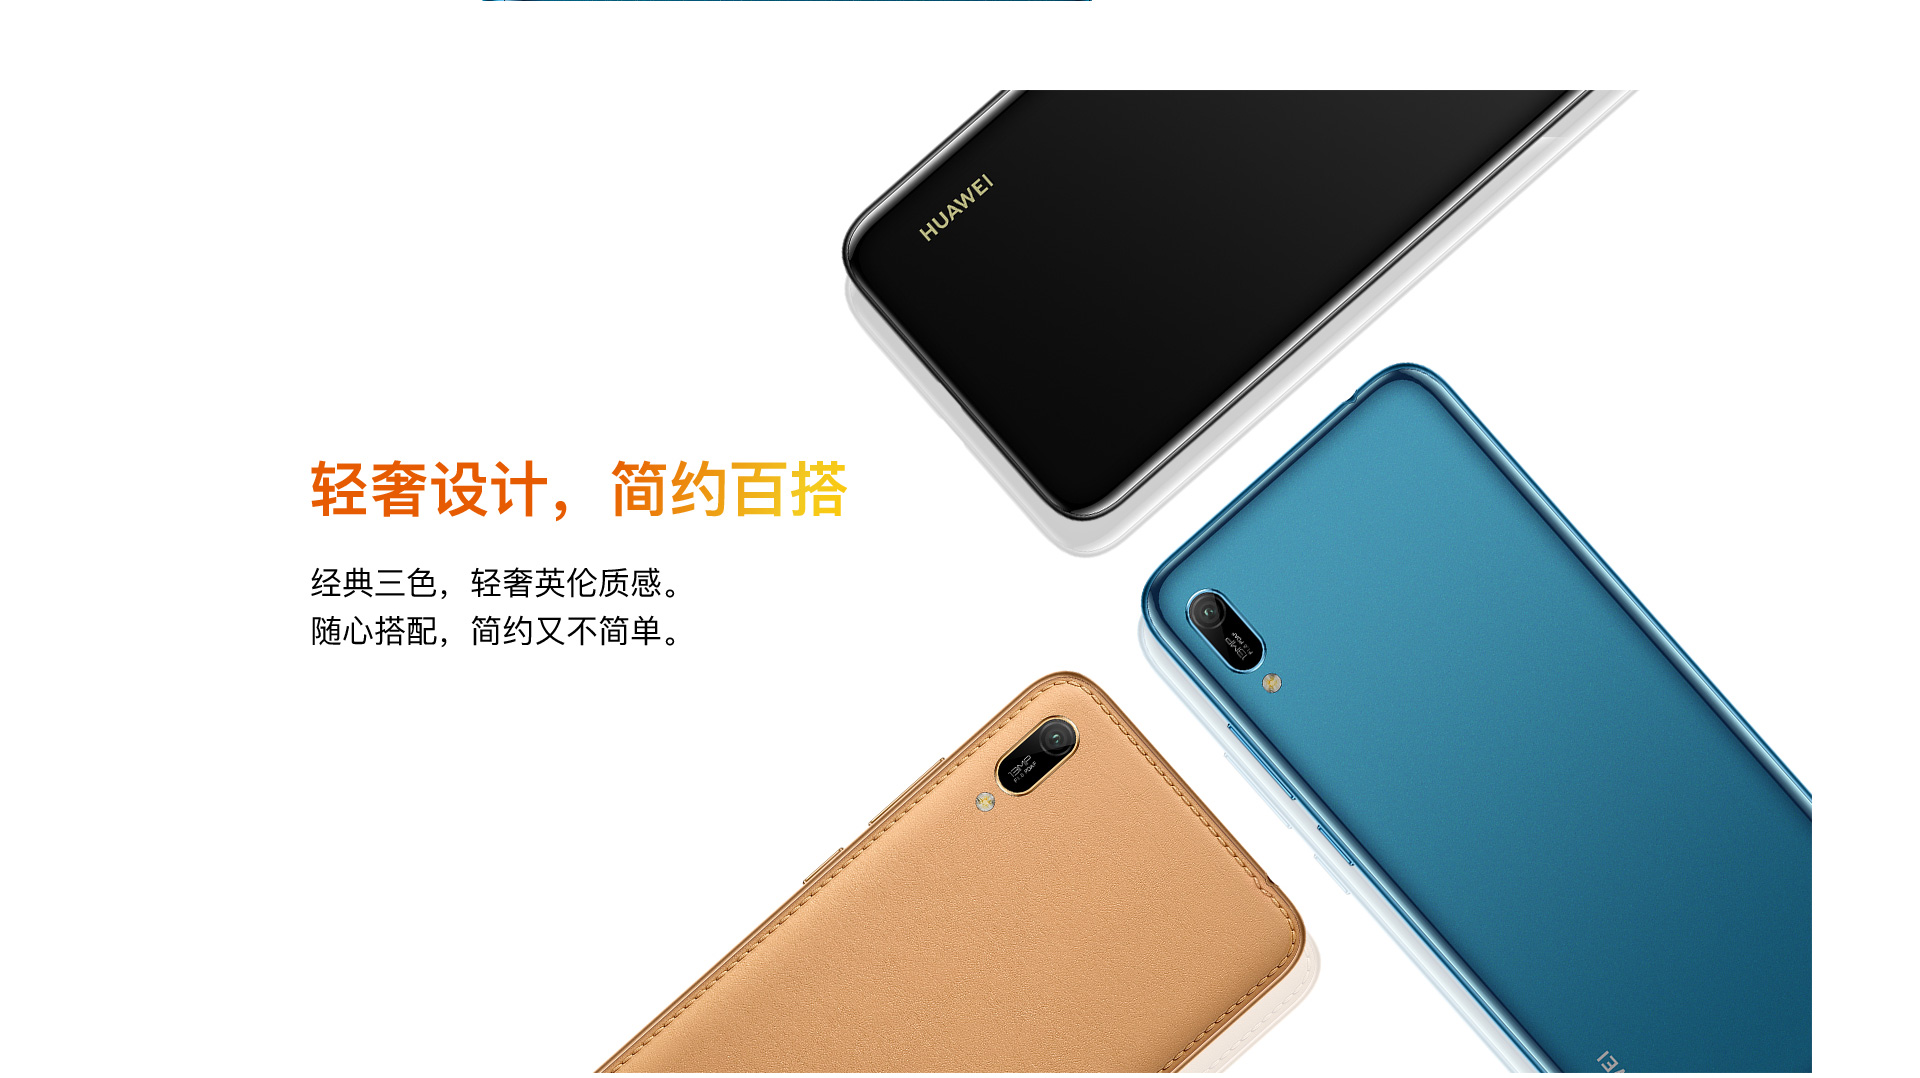 Huawei Enjoy 9e all colors